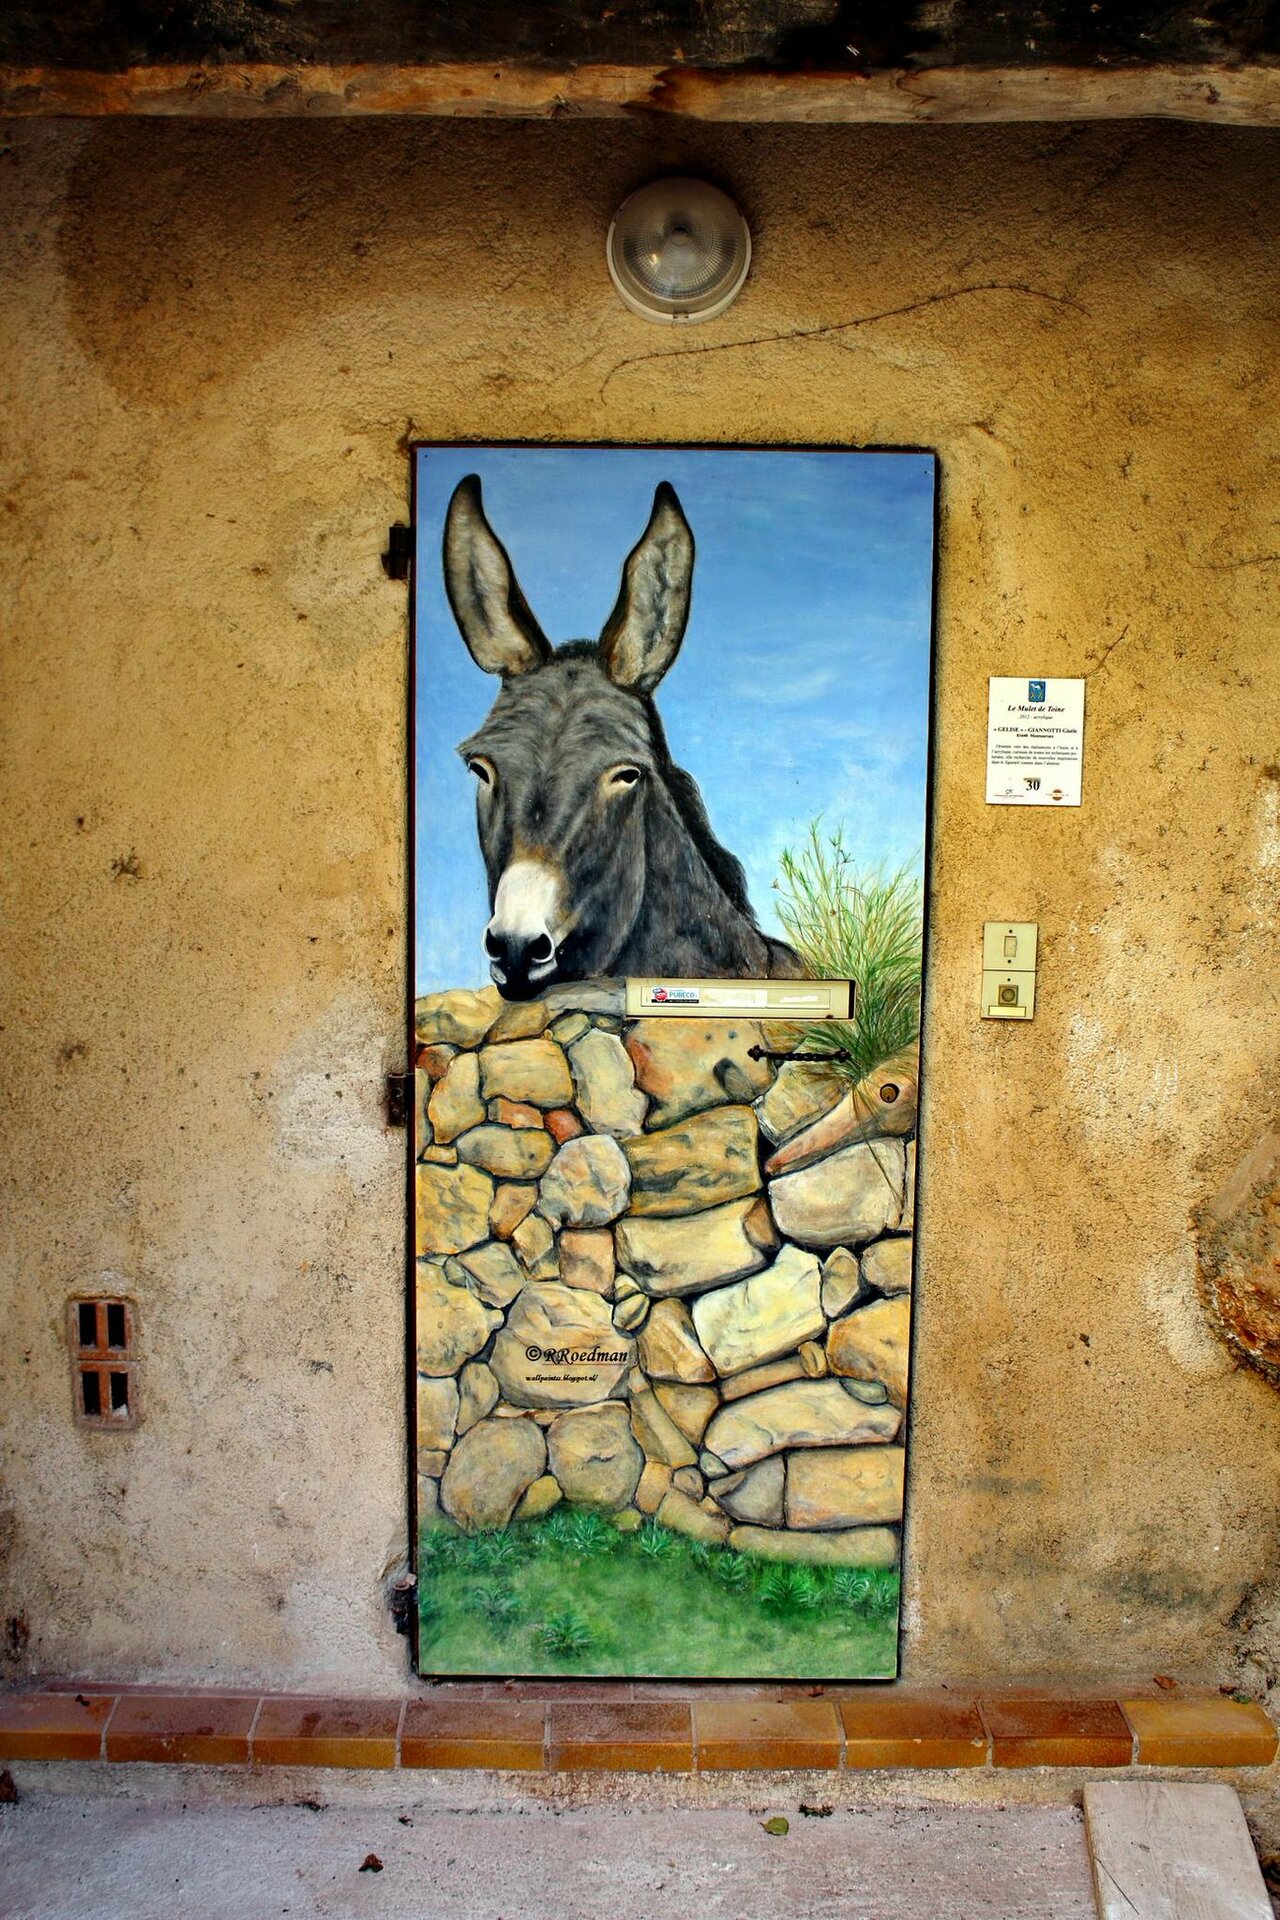 RT @RRoedman: #streetart #graffiti #mural donkey on a door in #Tourrettes #France ,2 pics at http://wallpaintss.blogspot.nl http://t.co/CH0f2kWnbB